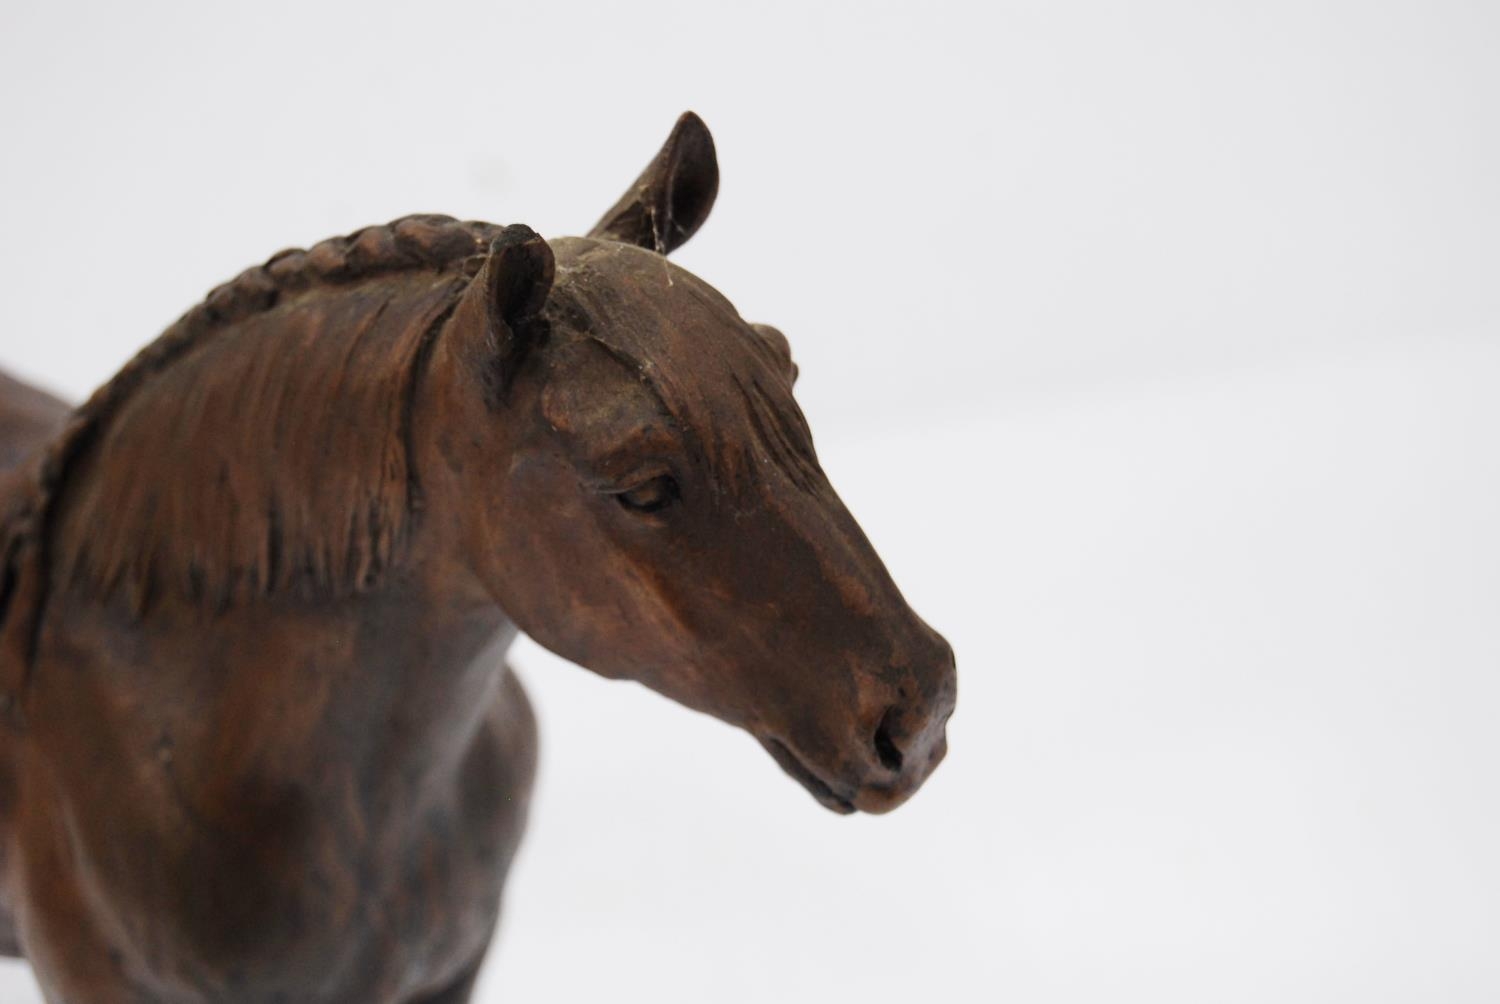 Bronzed figure of a horse by Northlight. - Bild 2 aus 3